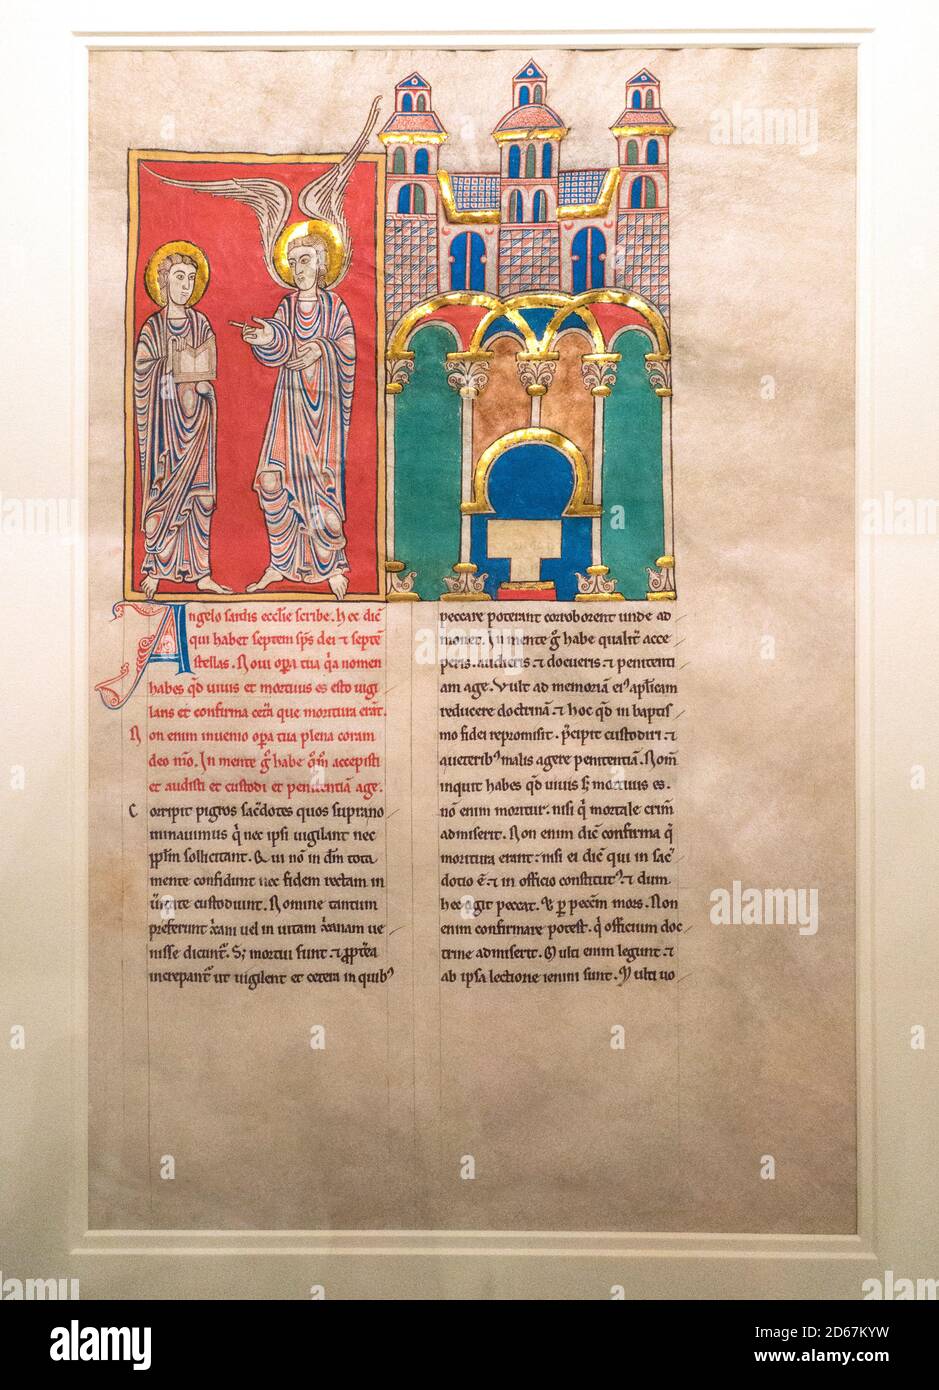 Illuminated medieval manuscript Metropolitan Museum of Art (MET) New York, NY, USA Stock Photo